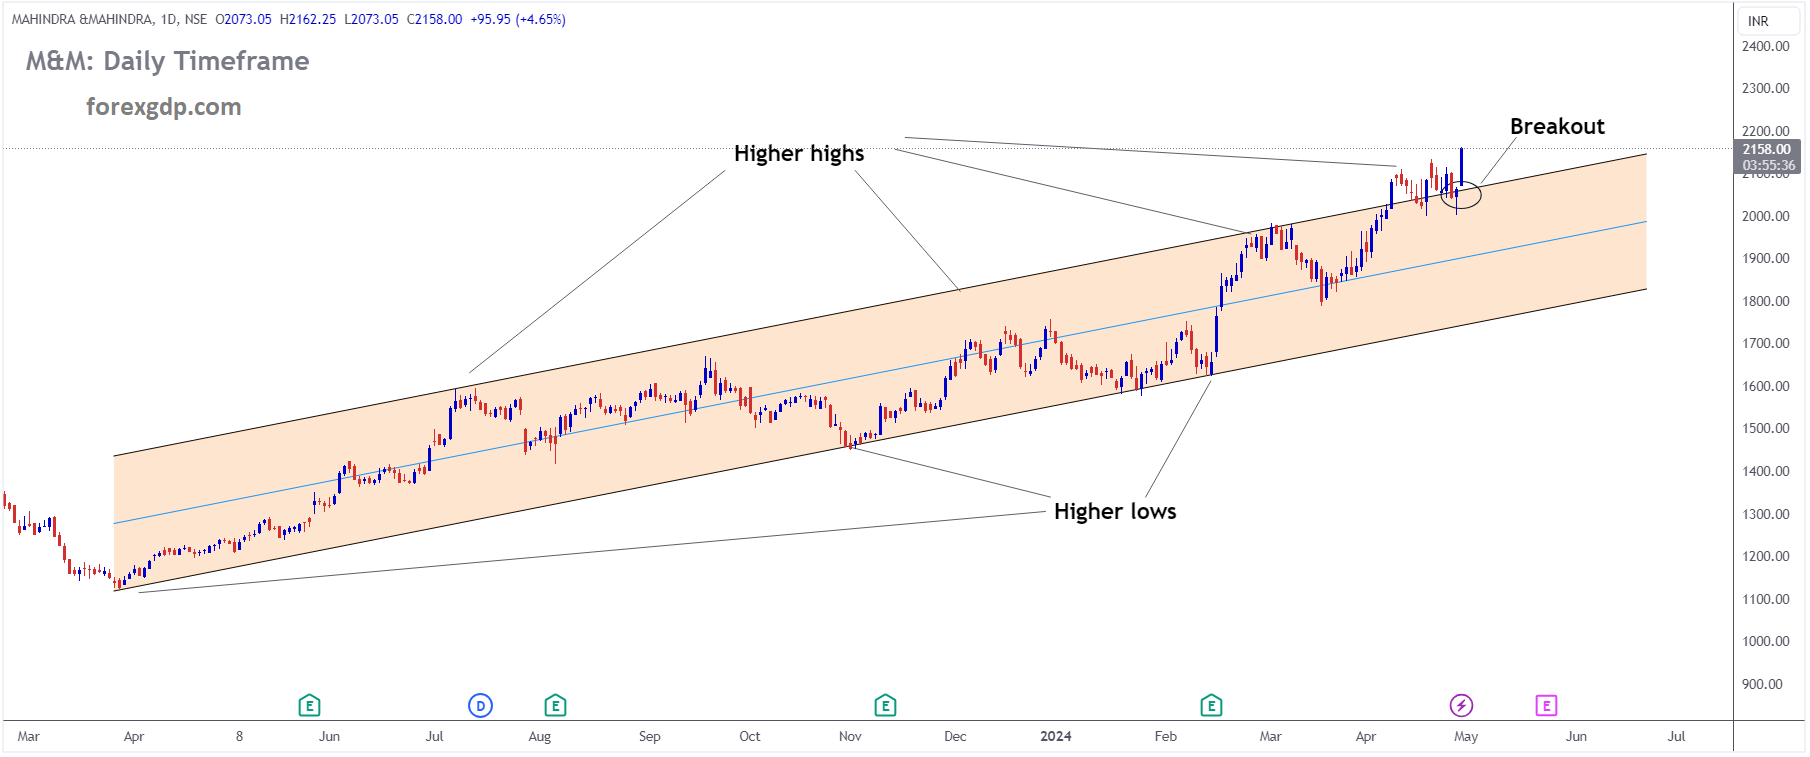 MAHINDRA & MAHINDRA Market Price has broken Ascending channel in upside